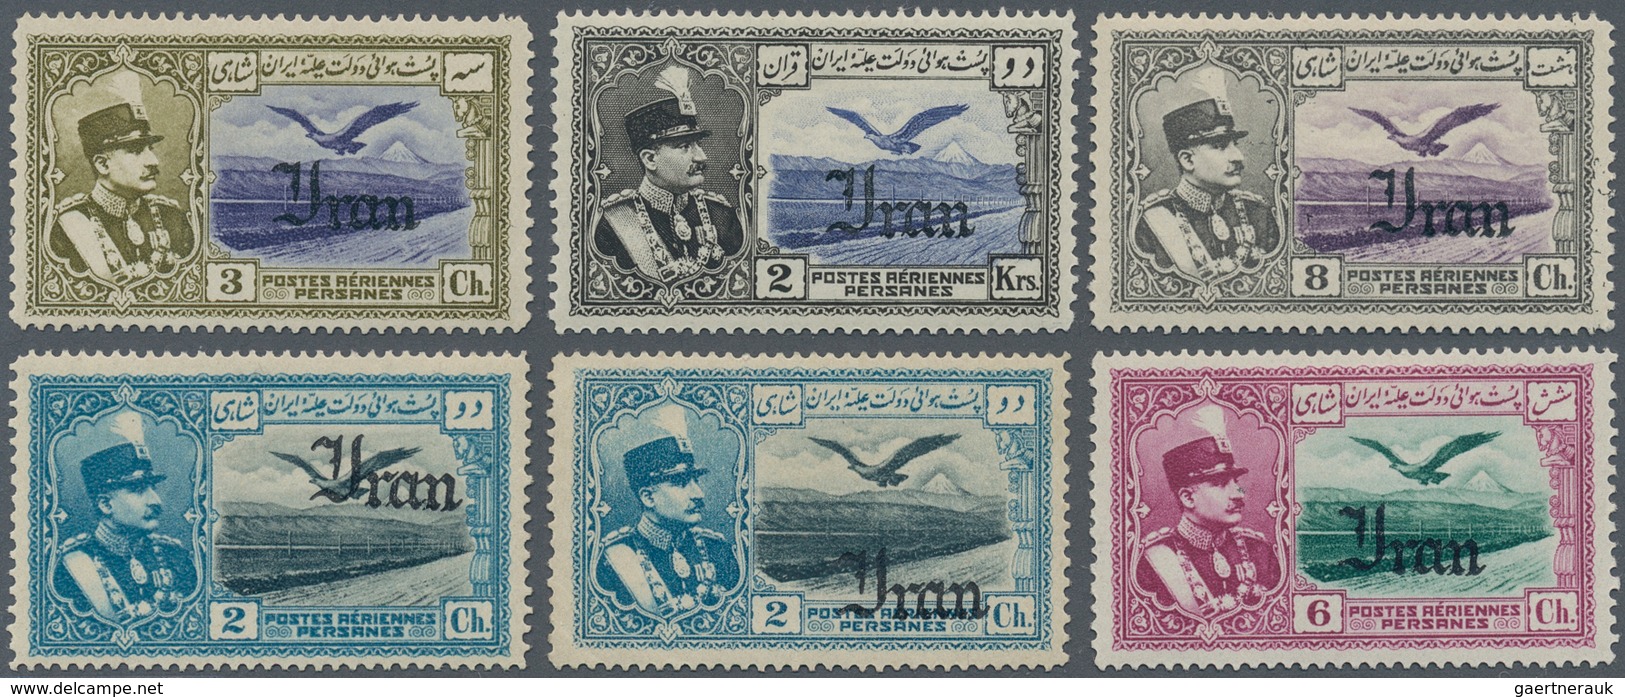 Iran: 1935, "IRAN" Overprinted Issue 13 Values Showing Overprint Varieties, Off-set Prints, Mh / Mnh - Iran